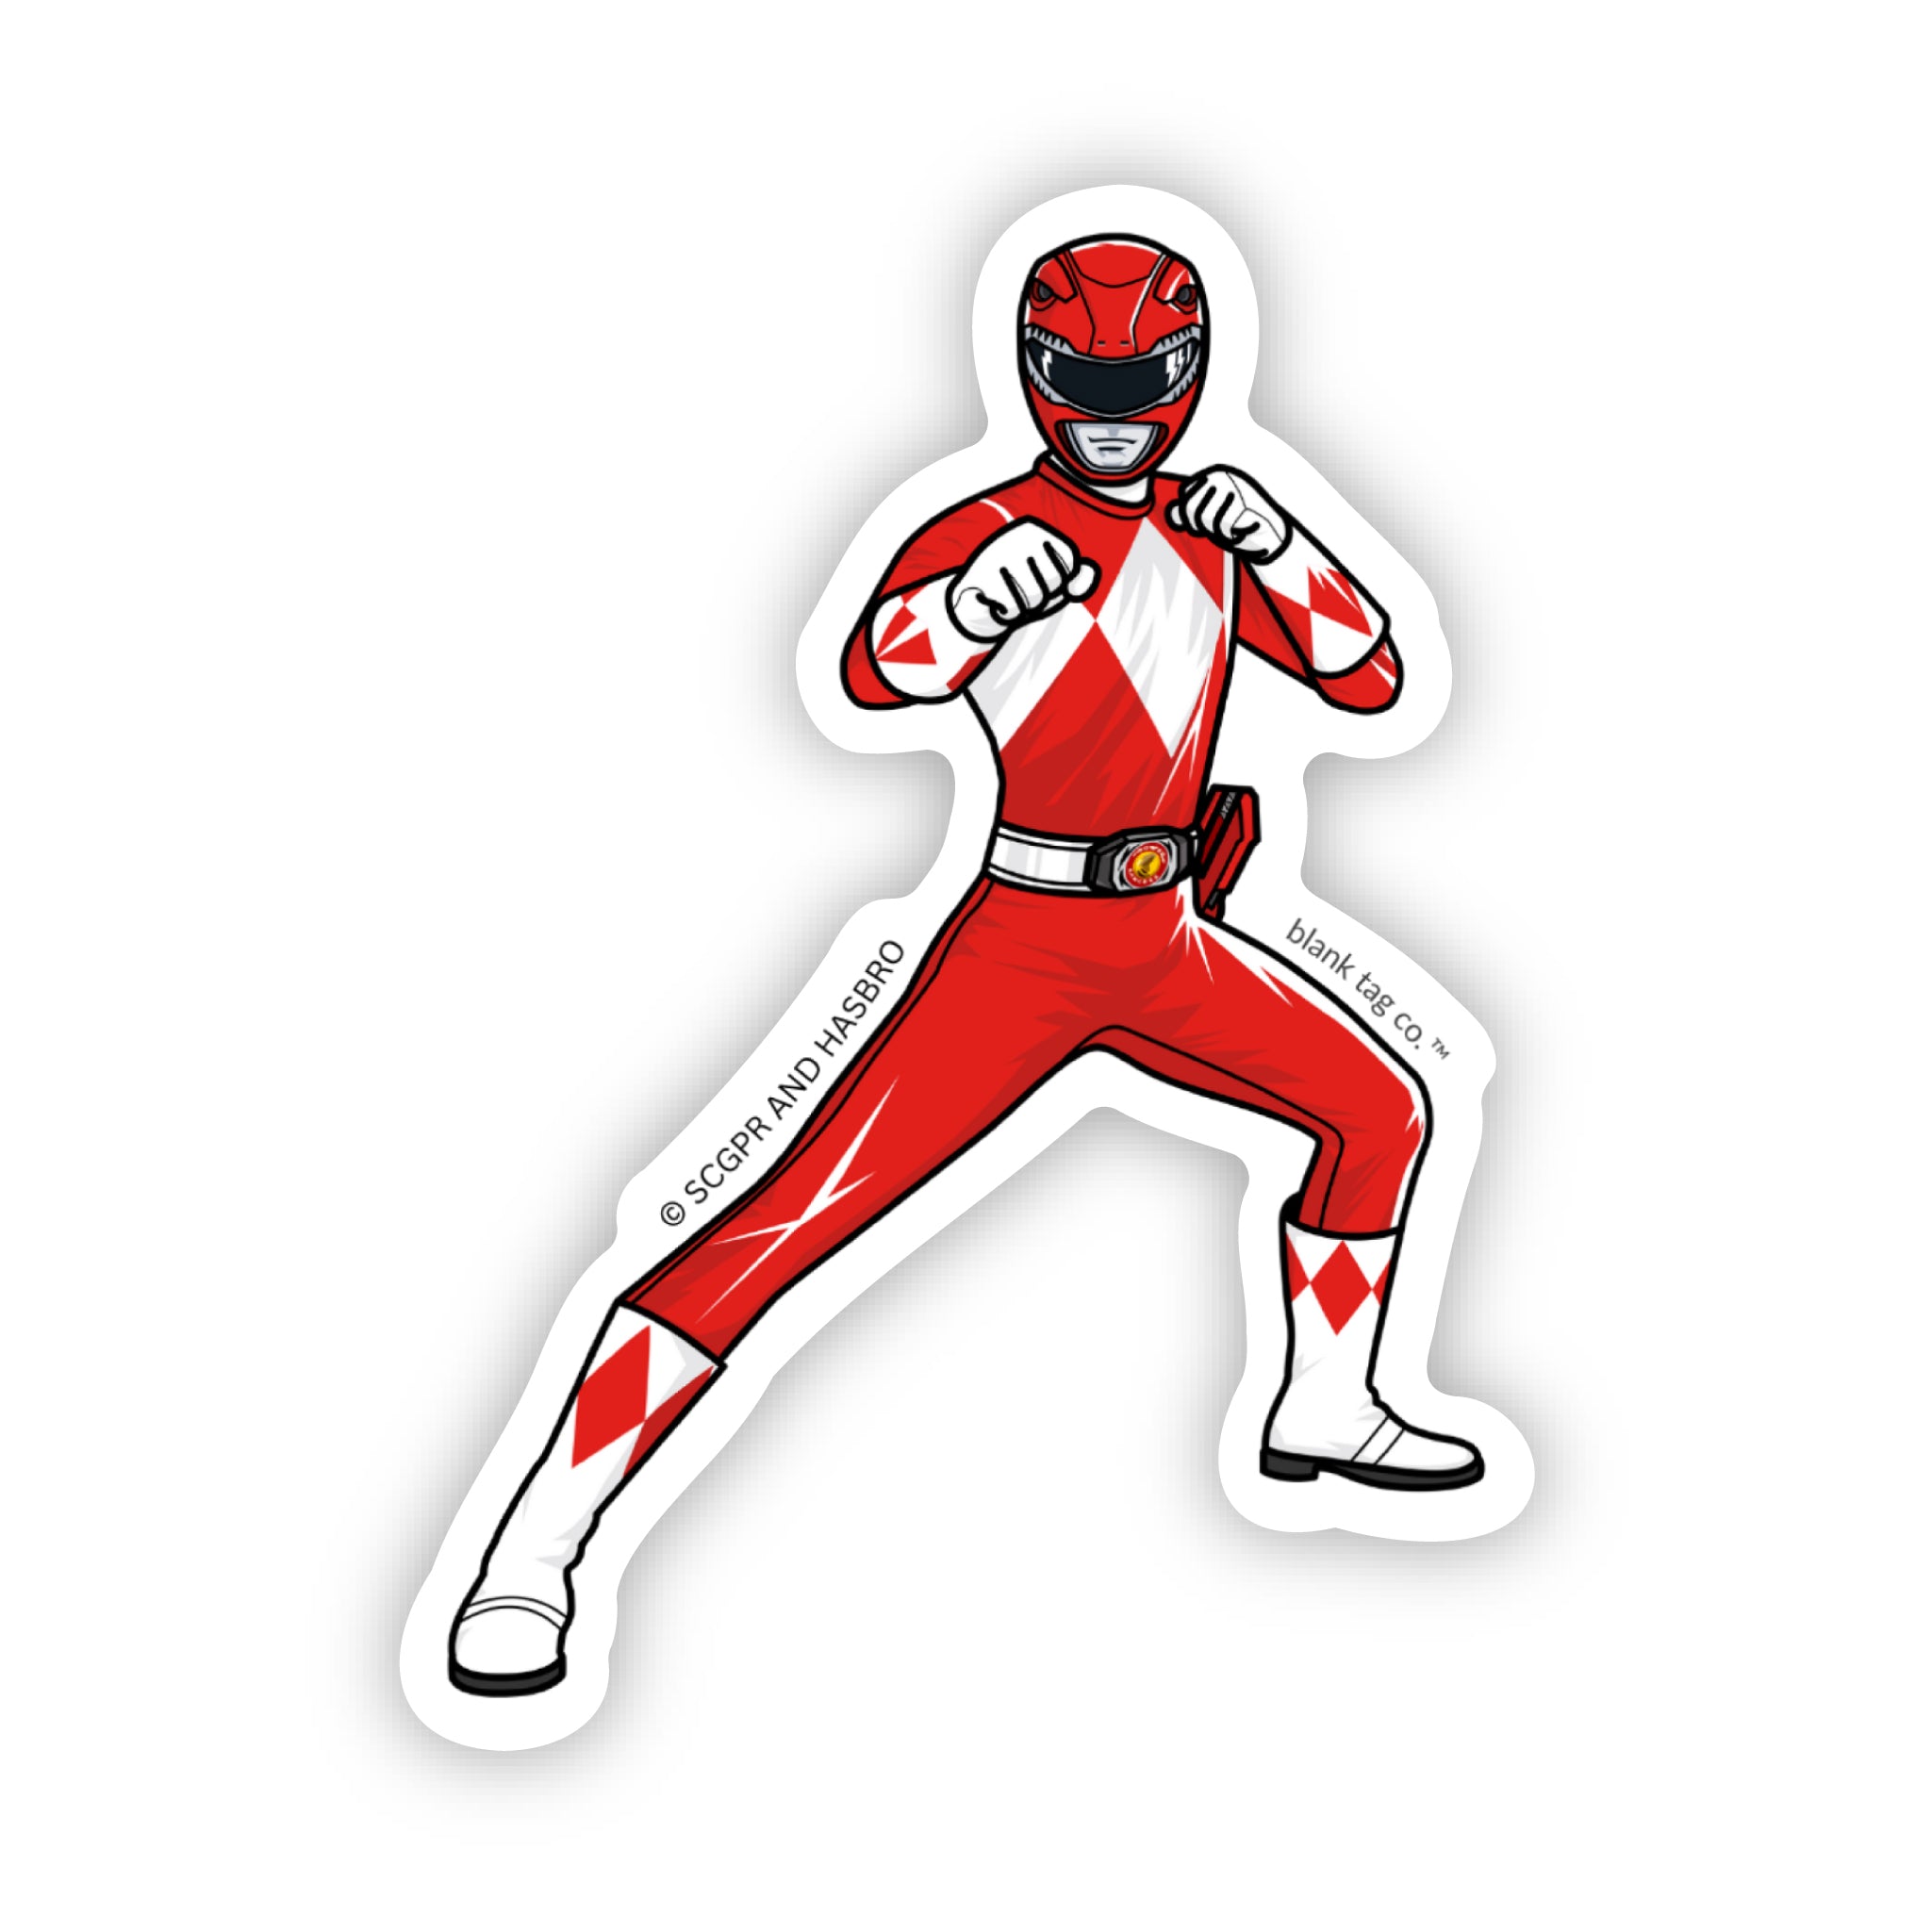 The Red Ranger Sticker